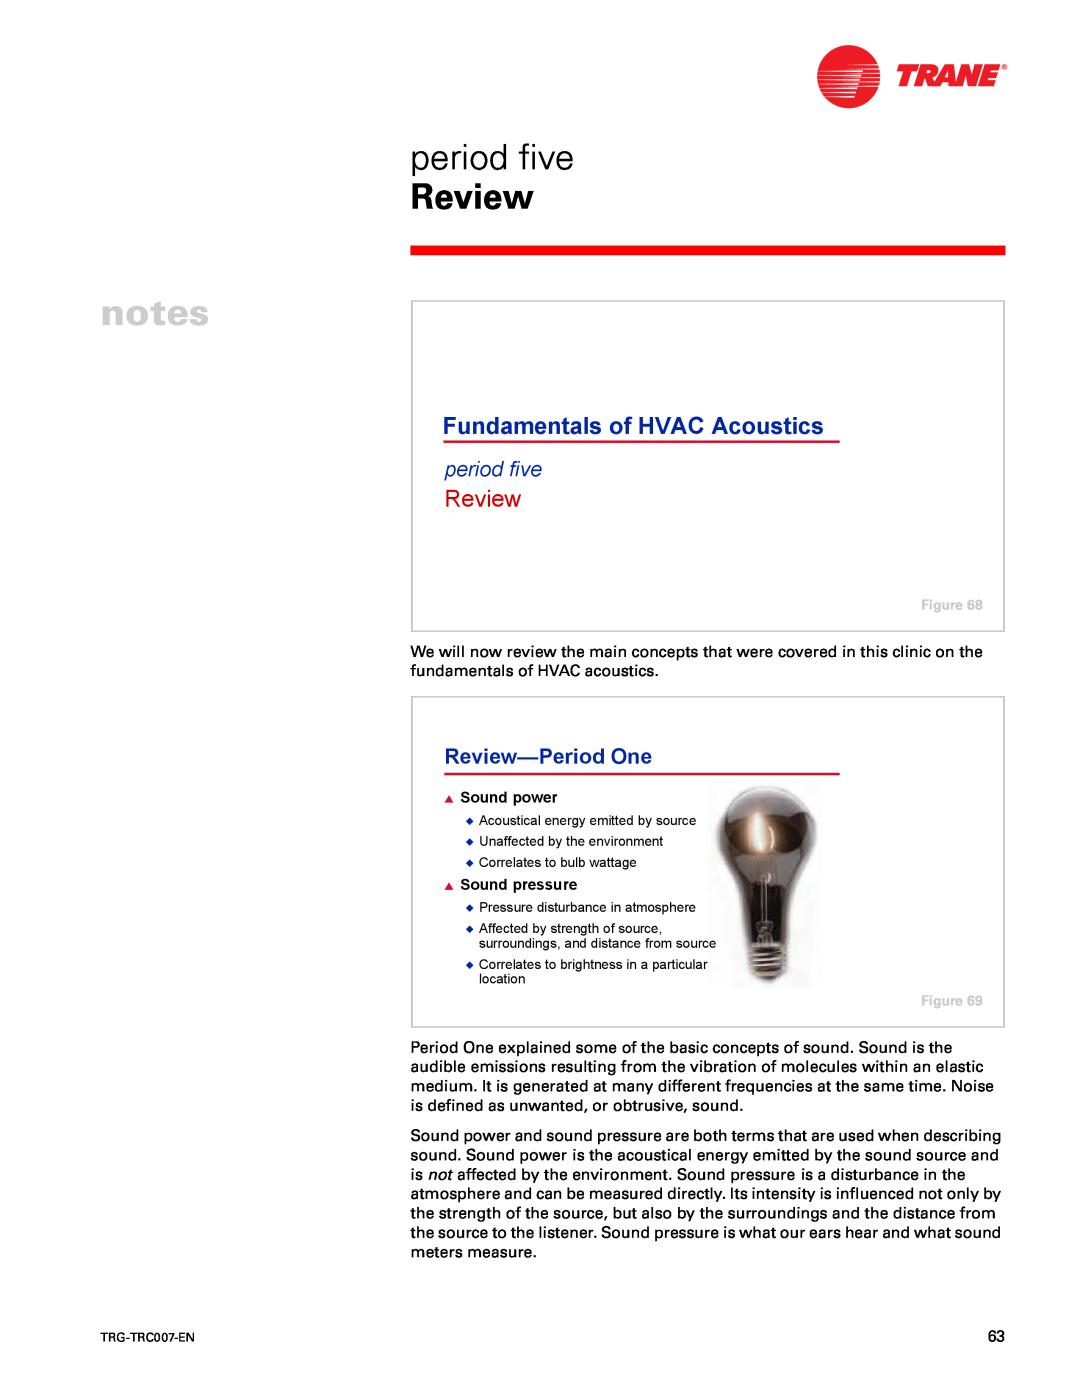 Trane TRG-TRC007-EN manual period five, Review-PeriodOne, Fundamentals of HVAC Acoustics 